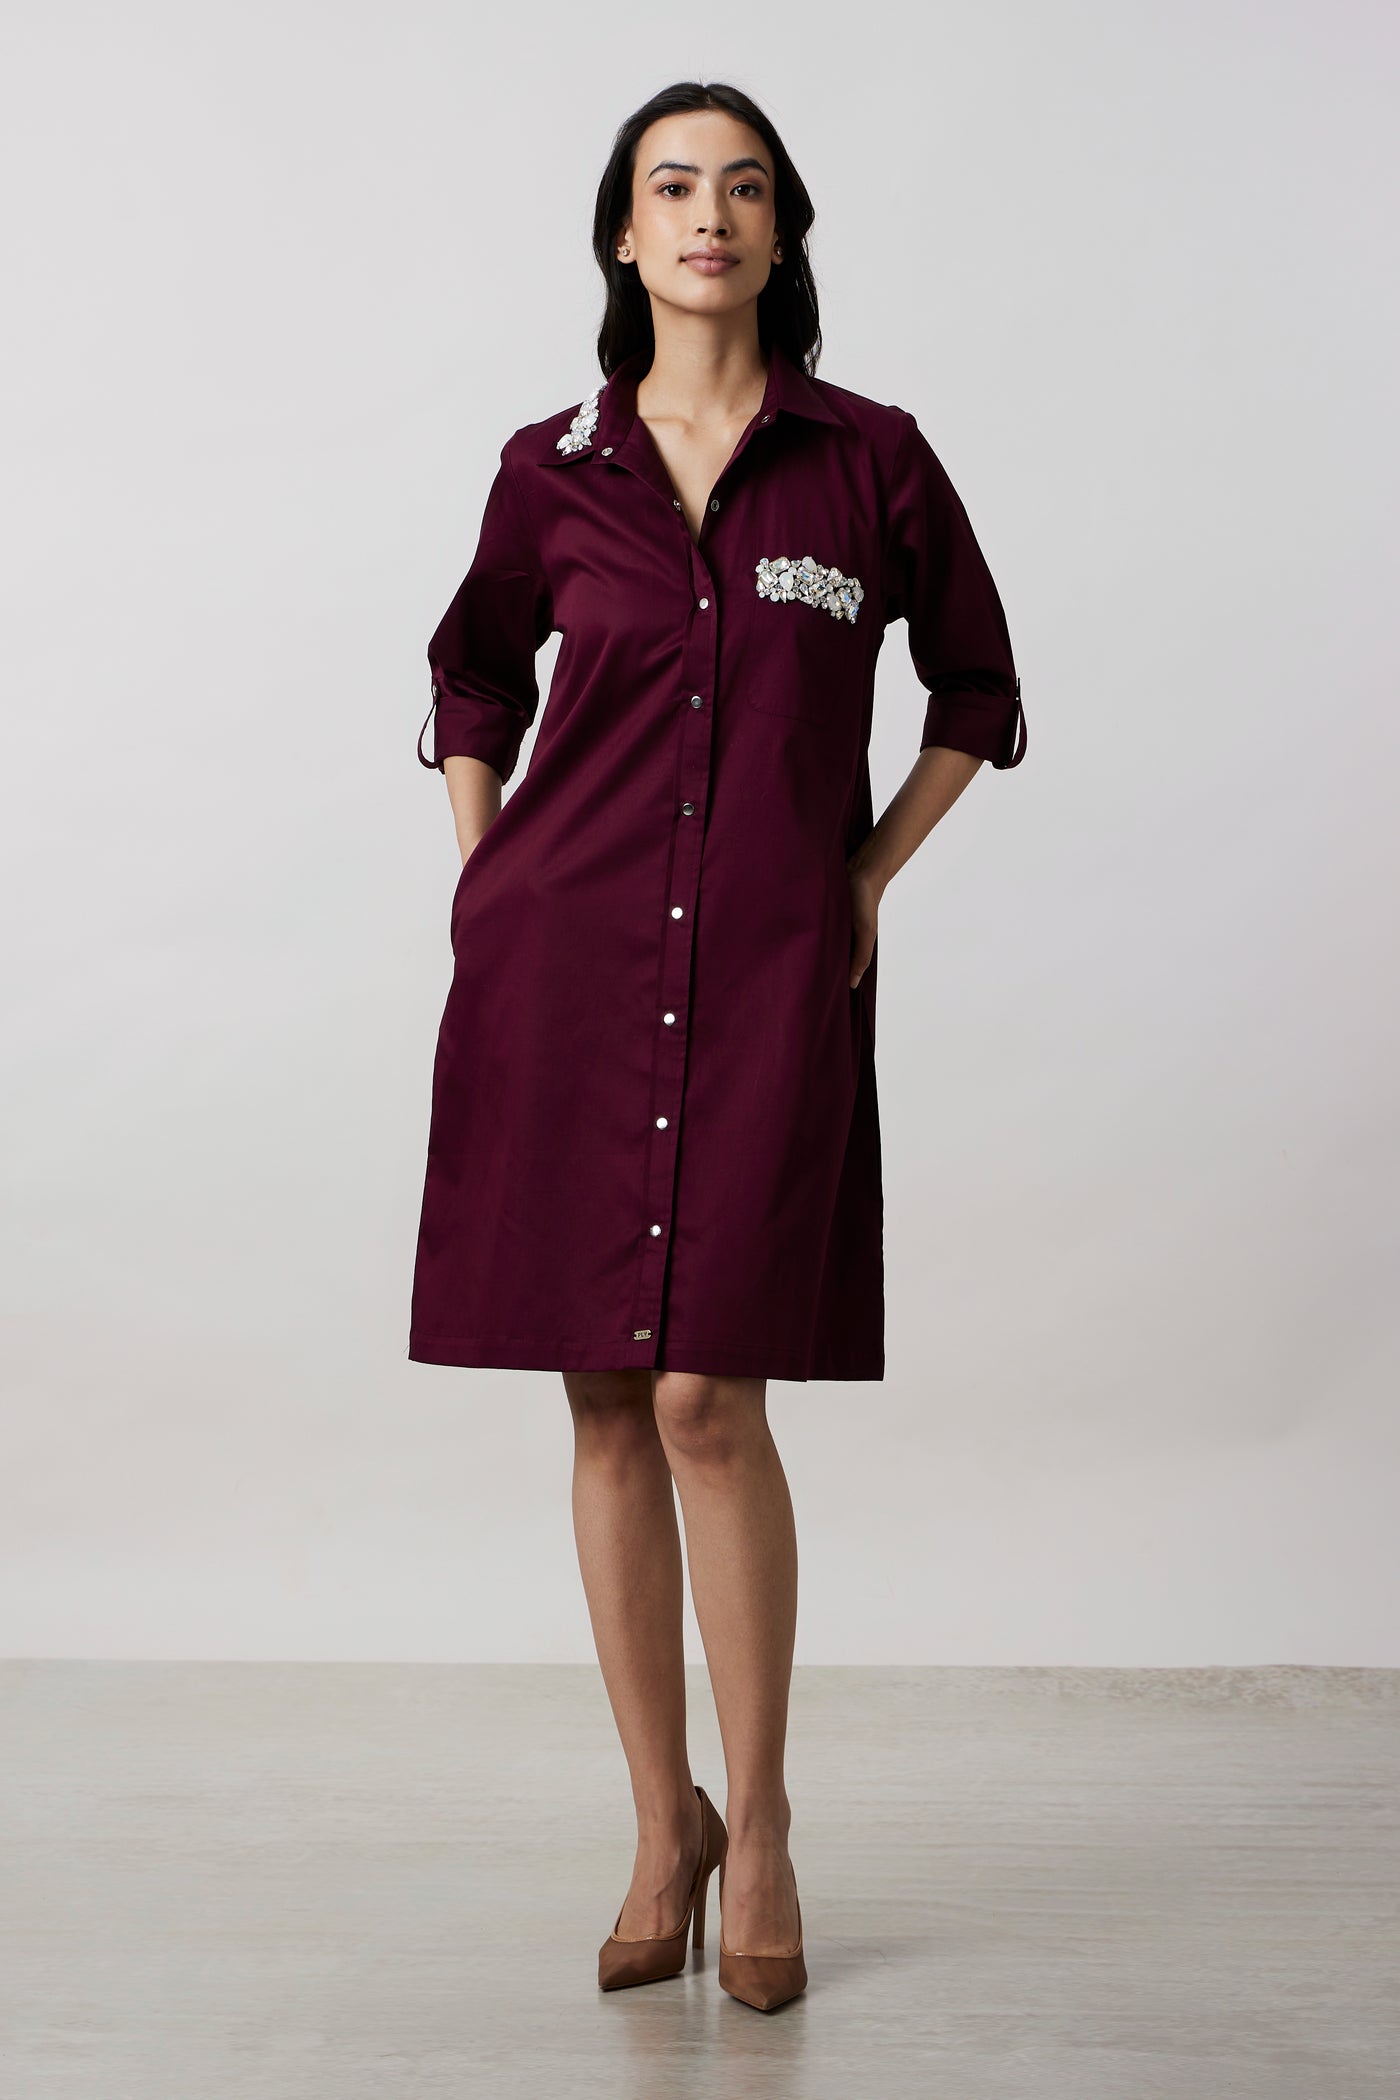 Burgandy Collar Pocket Swarovski Shirt Dress